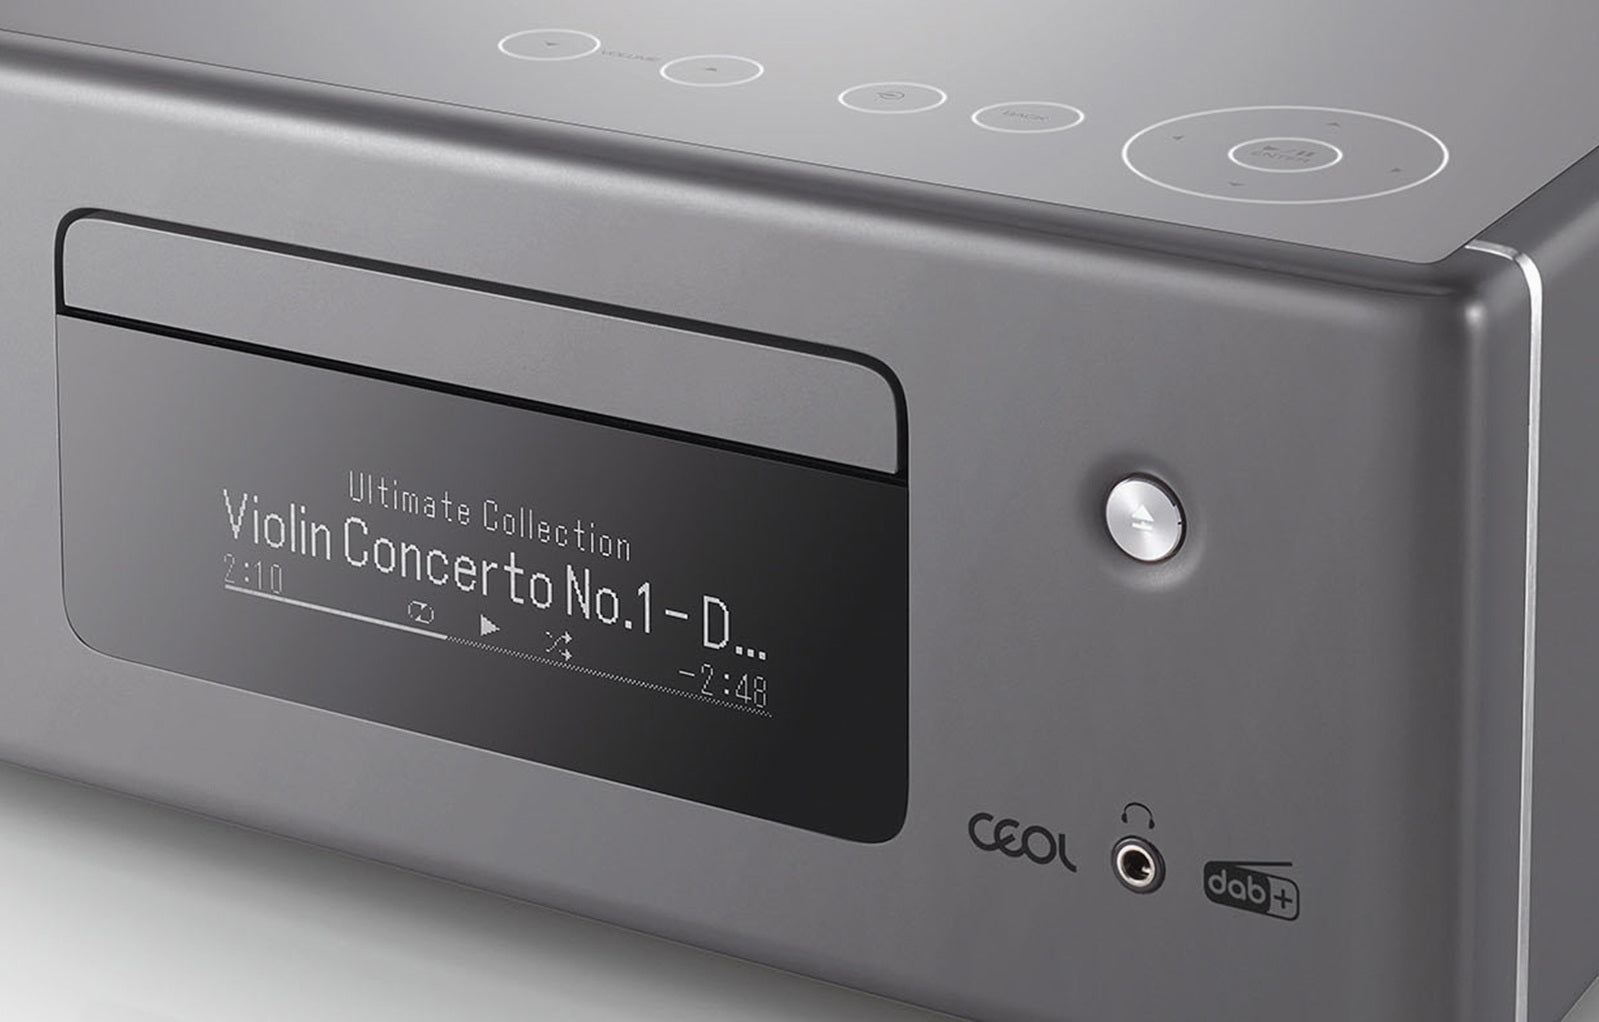 Denon RCD-N11DAB CD Receiver voor Stereo Set - DAB+ Radio - Bluetooth - HEOS Multiroom - Spraakbesturing - Grijs